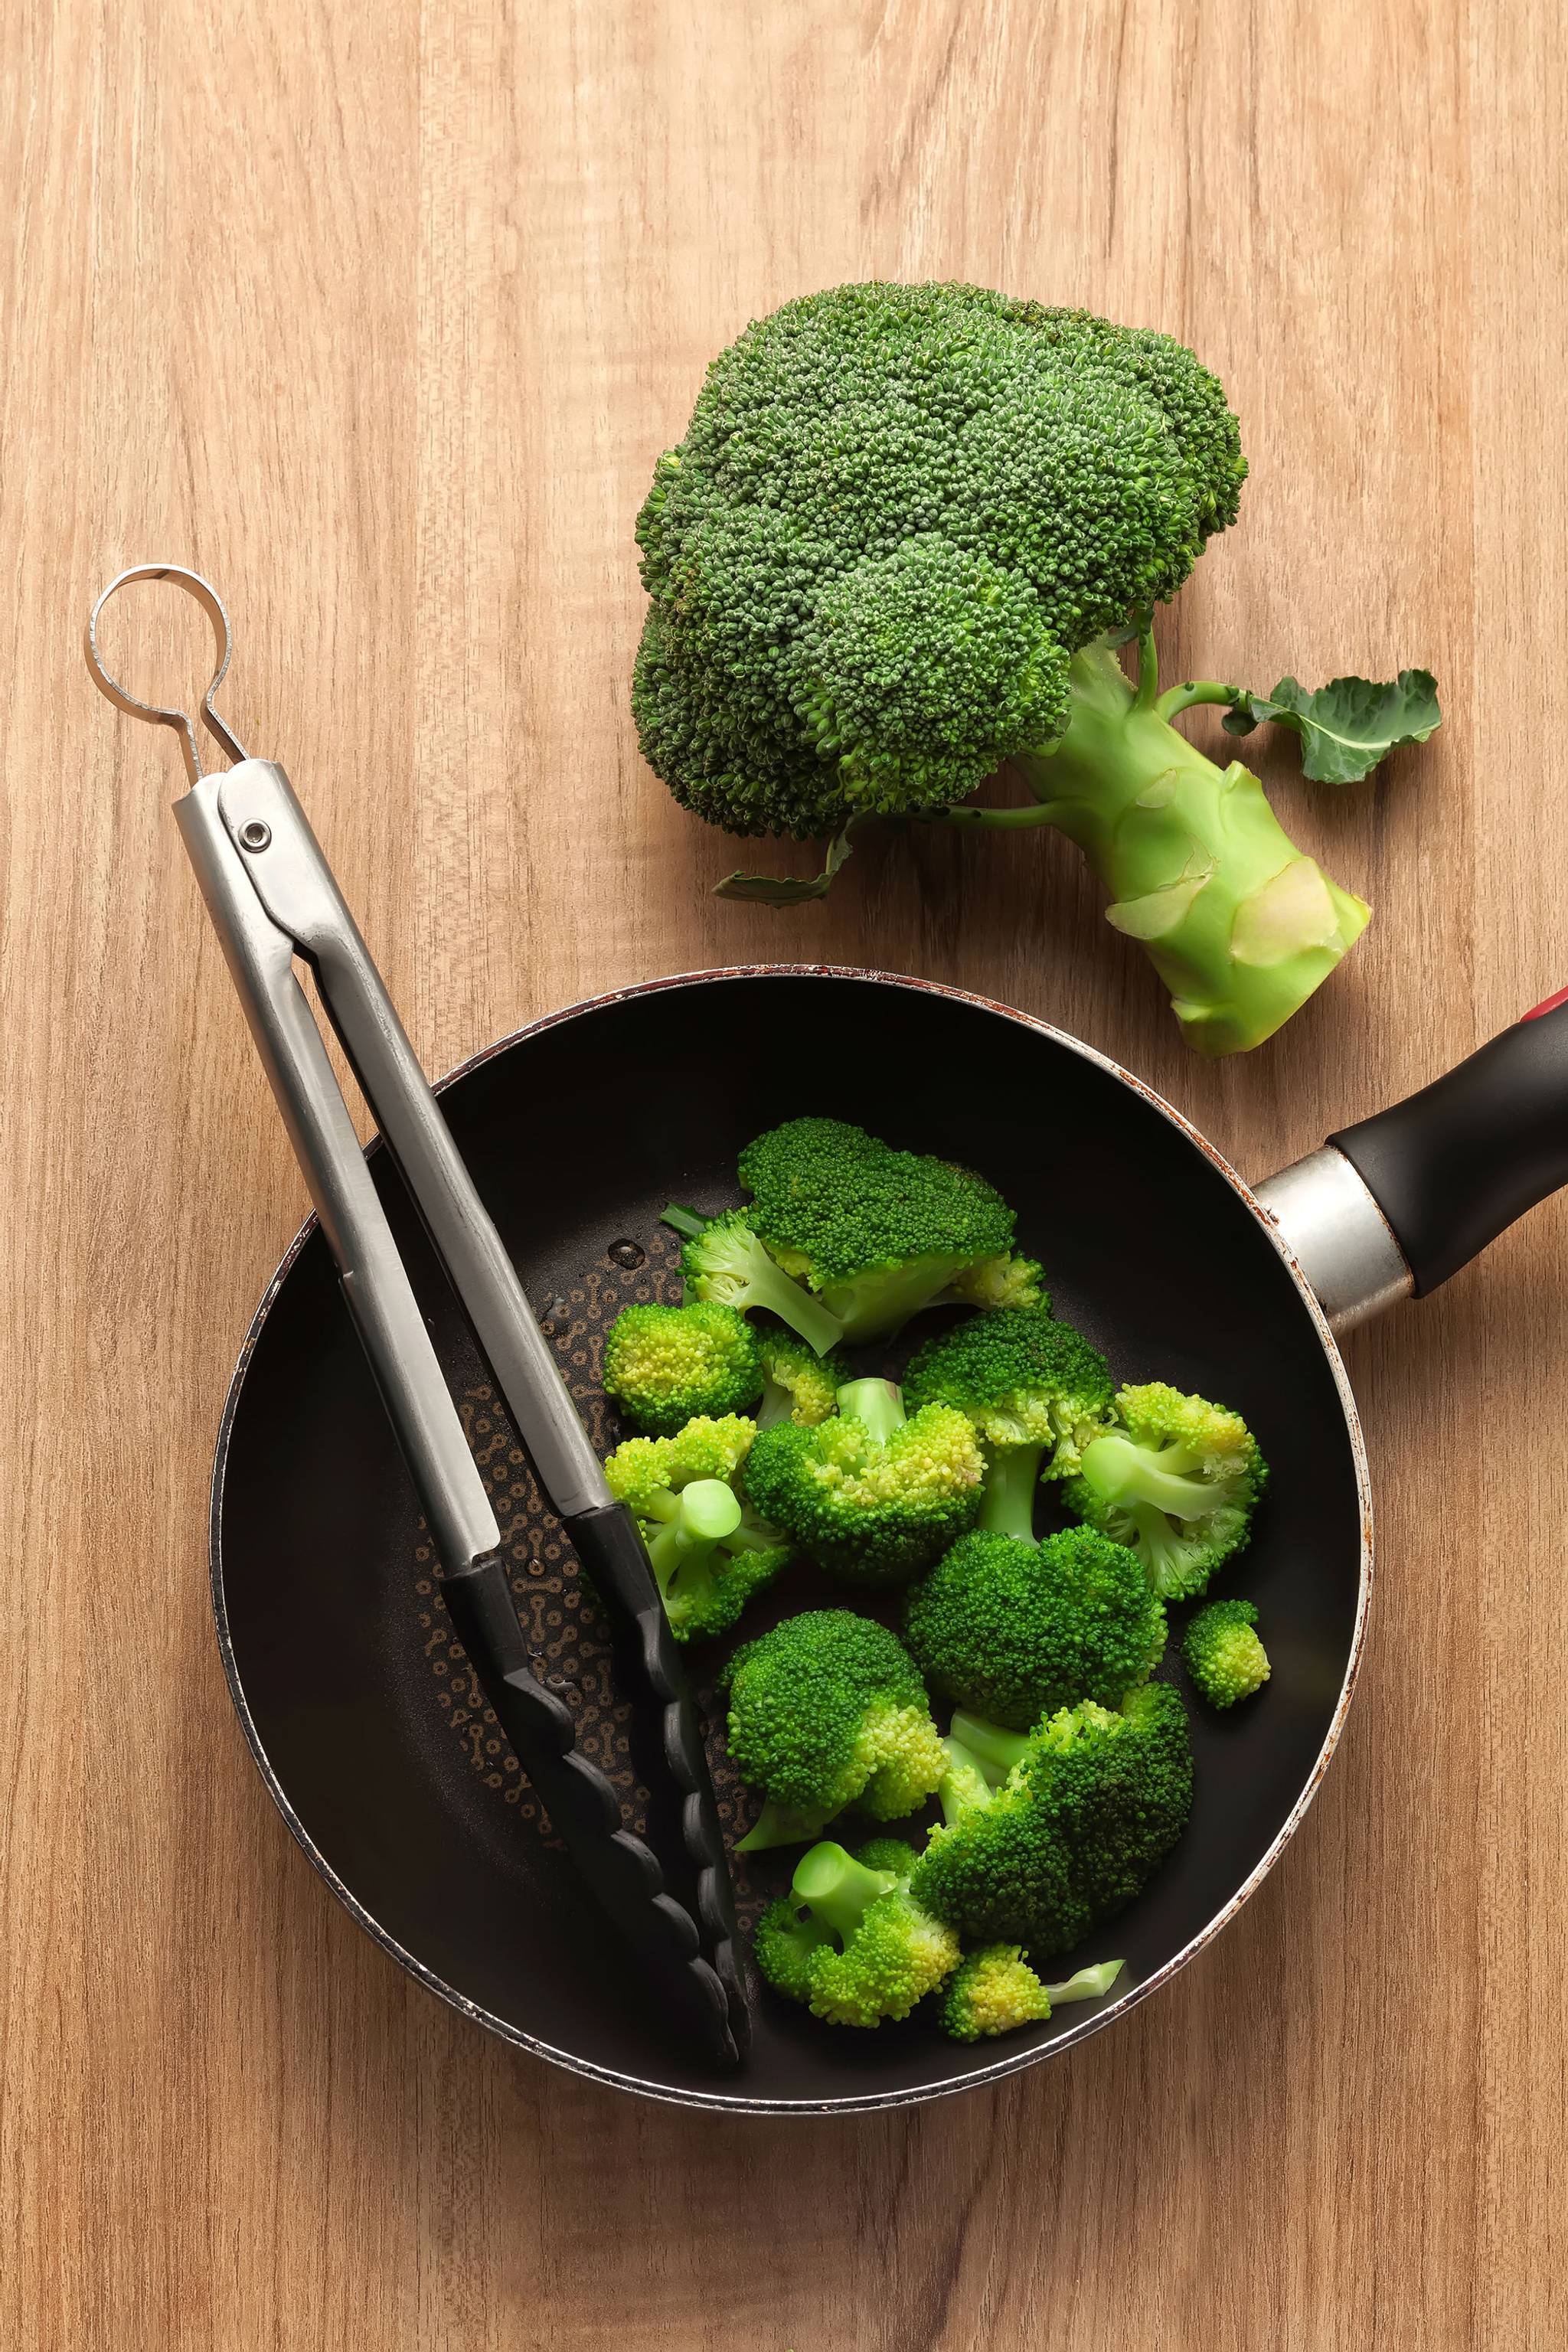 Enjoy a snack of broccoli